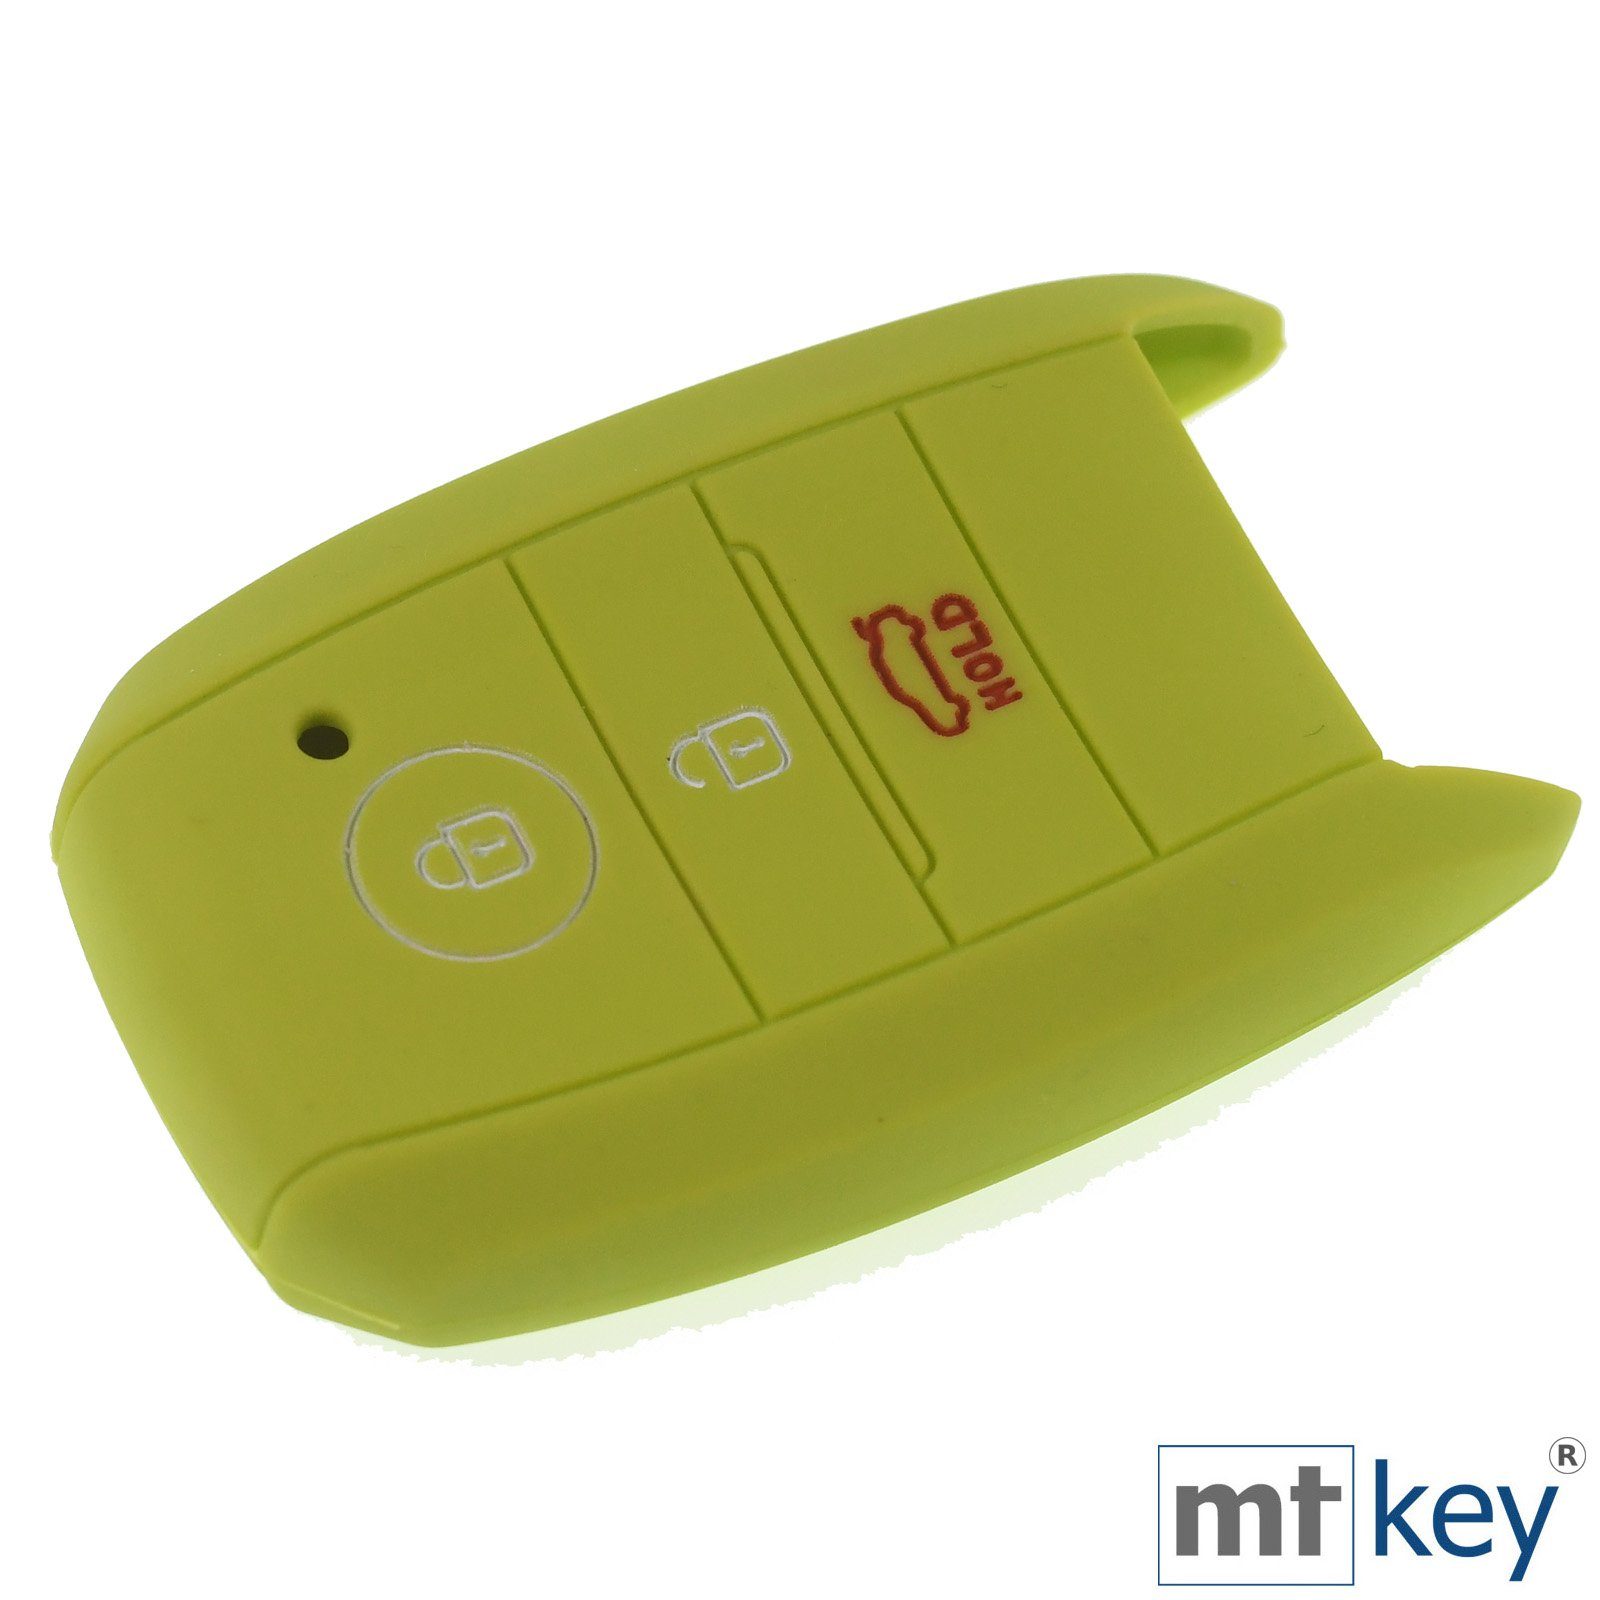 mt-key Schlüsseltasche Autoschlüssel Softcase Silikon Tasten Rio Stonic KIA 3 Ceed Picantio Apfelgrün, KEYLESS für Schutzhülle Sportage Soul